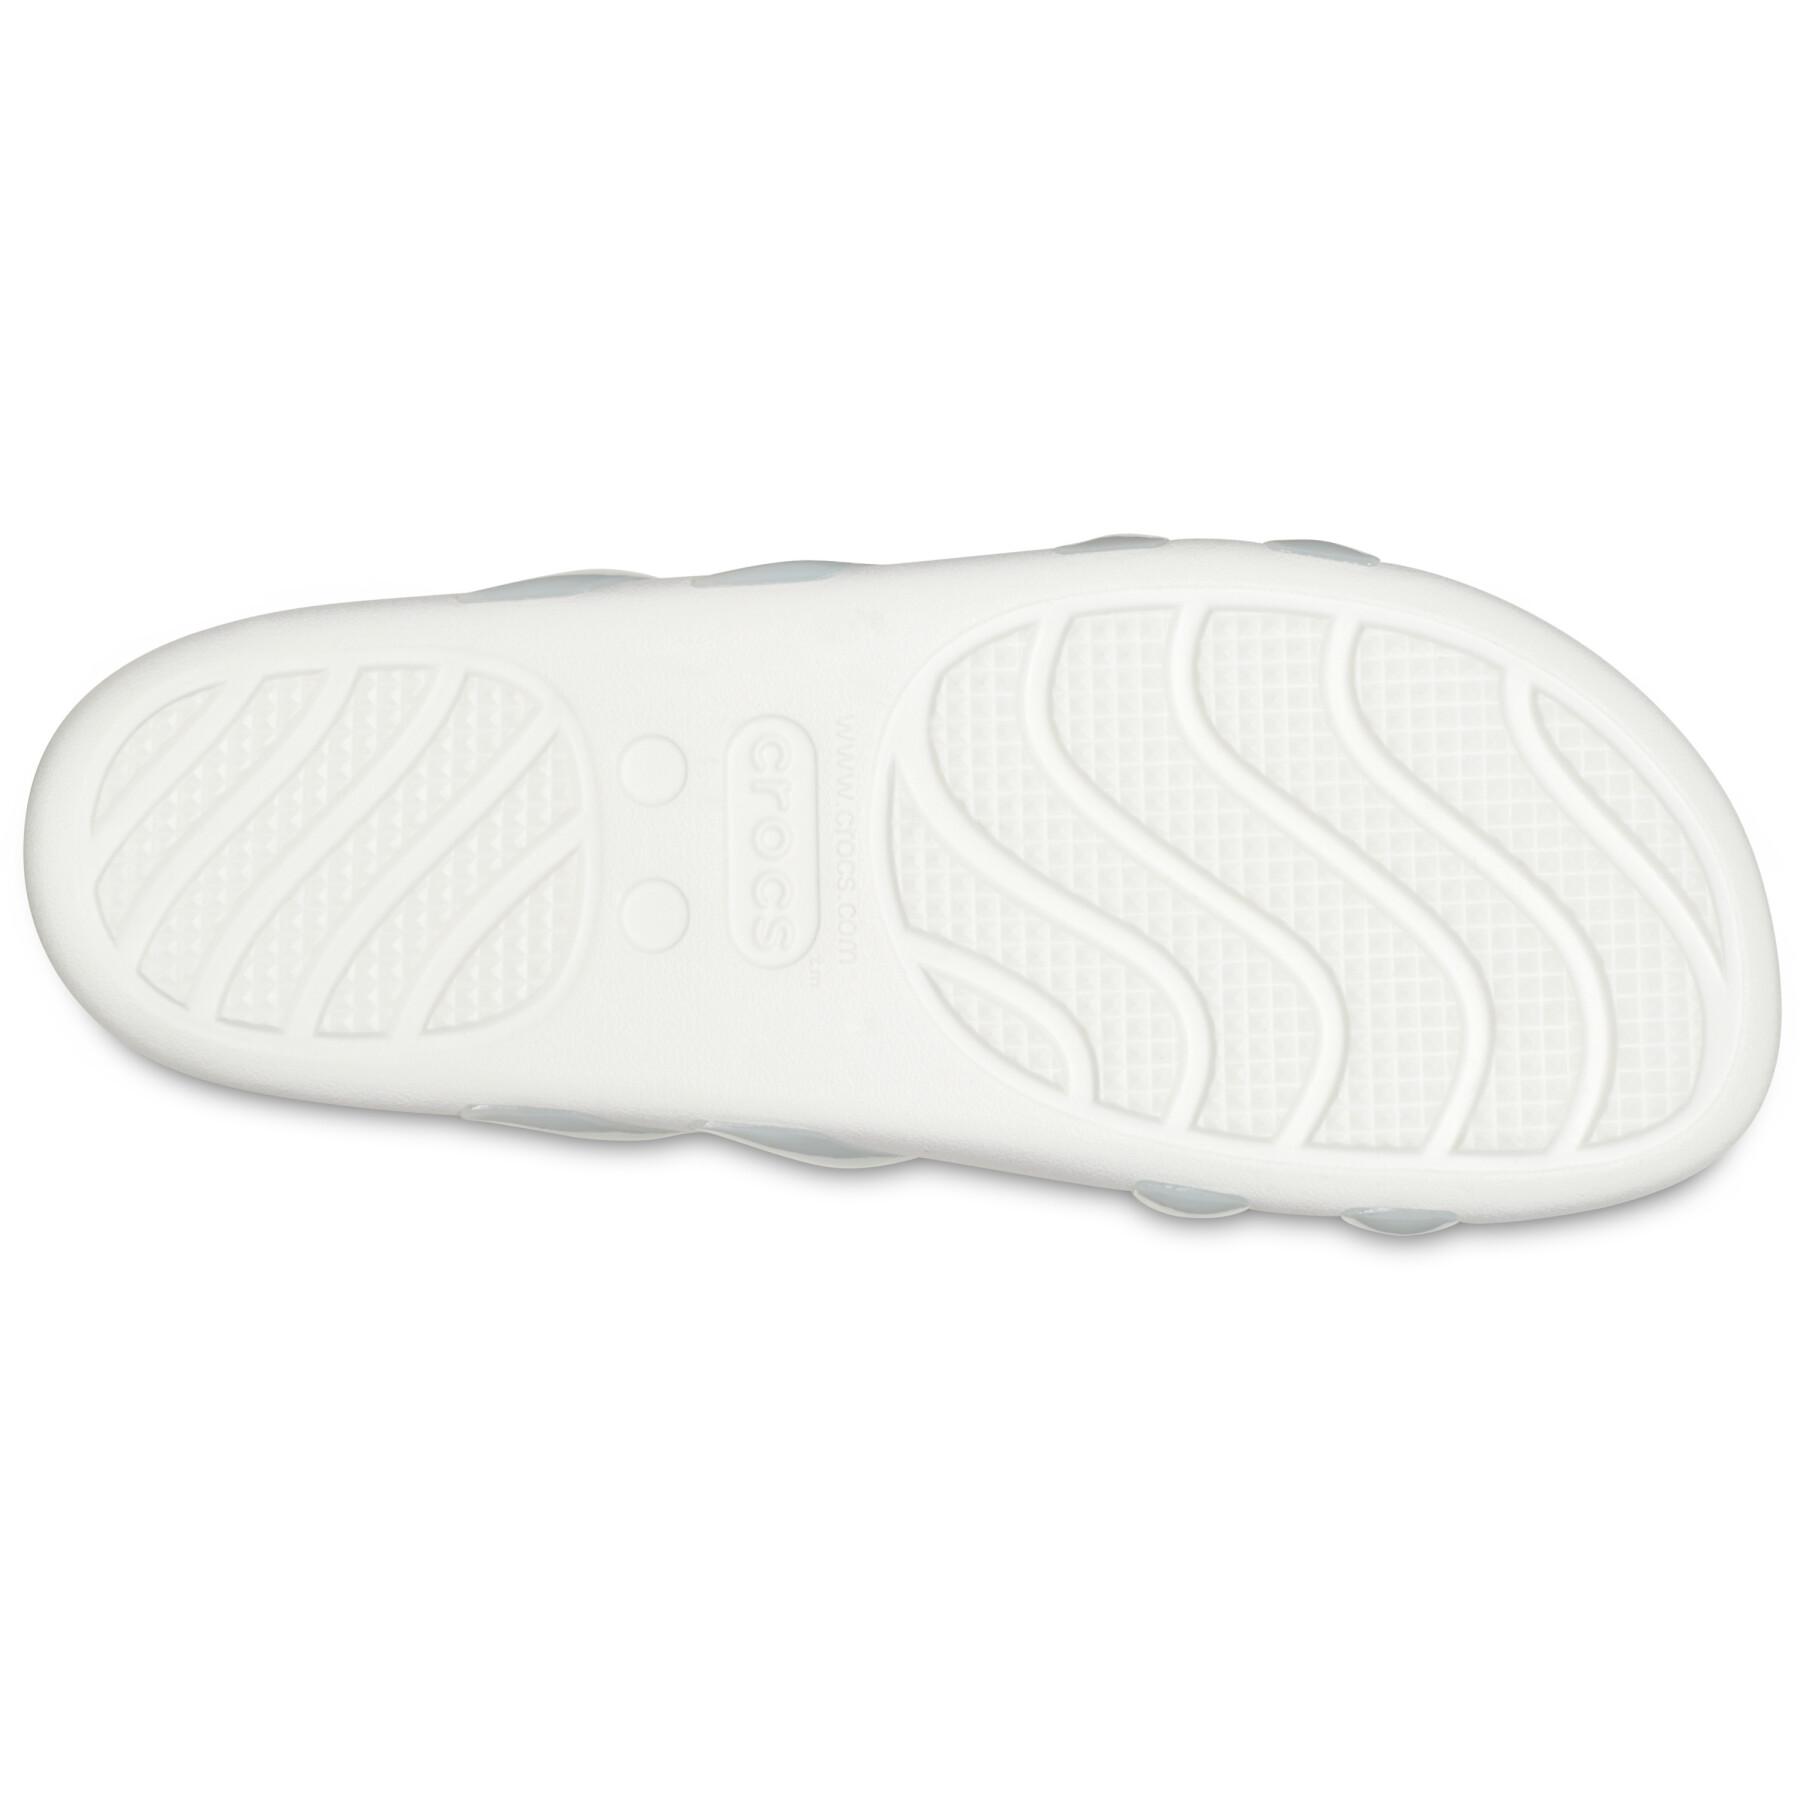 Sandálias femininas Crocs Splash Glossy Strappy